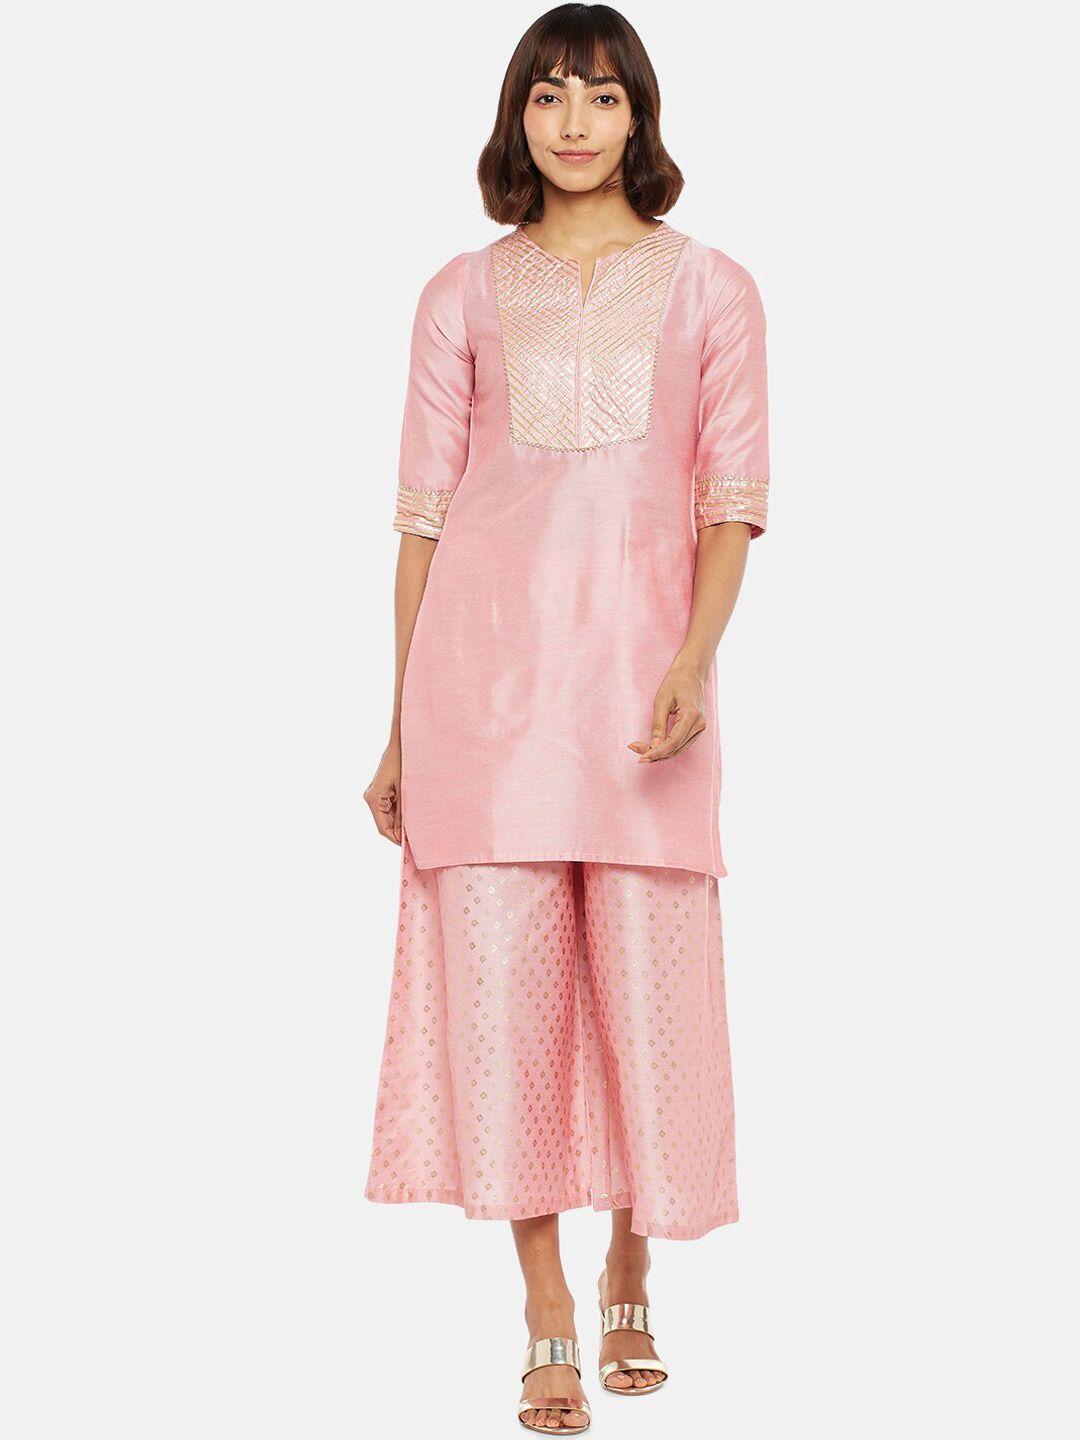 rangmanch by pantaloons women pink yoke design kurti with palazzos & with dupatta